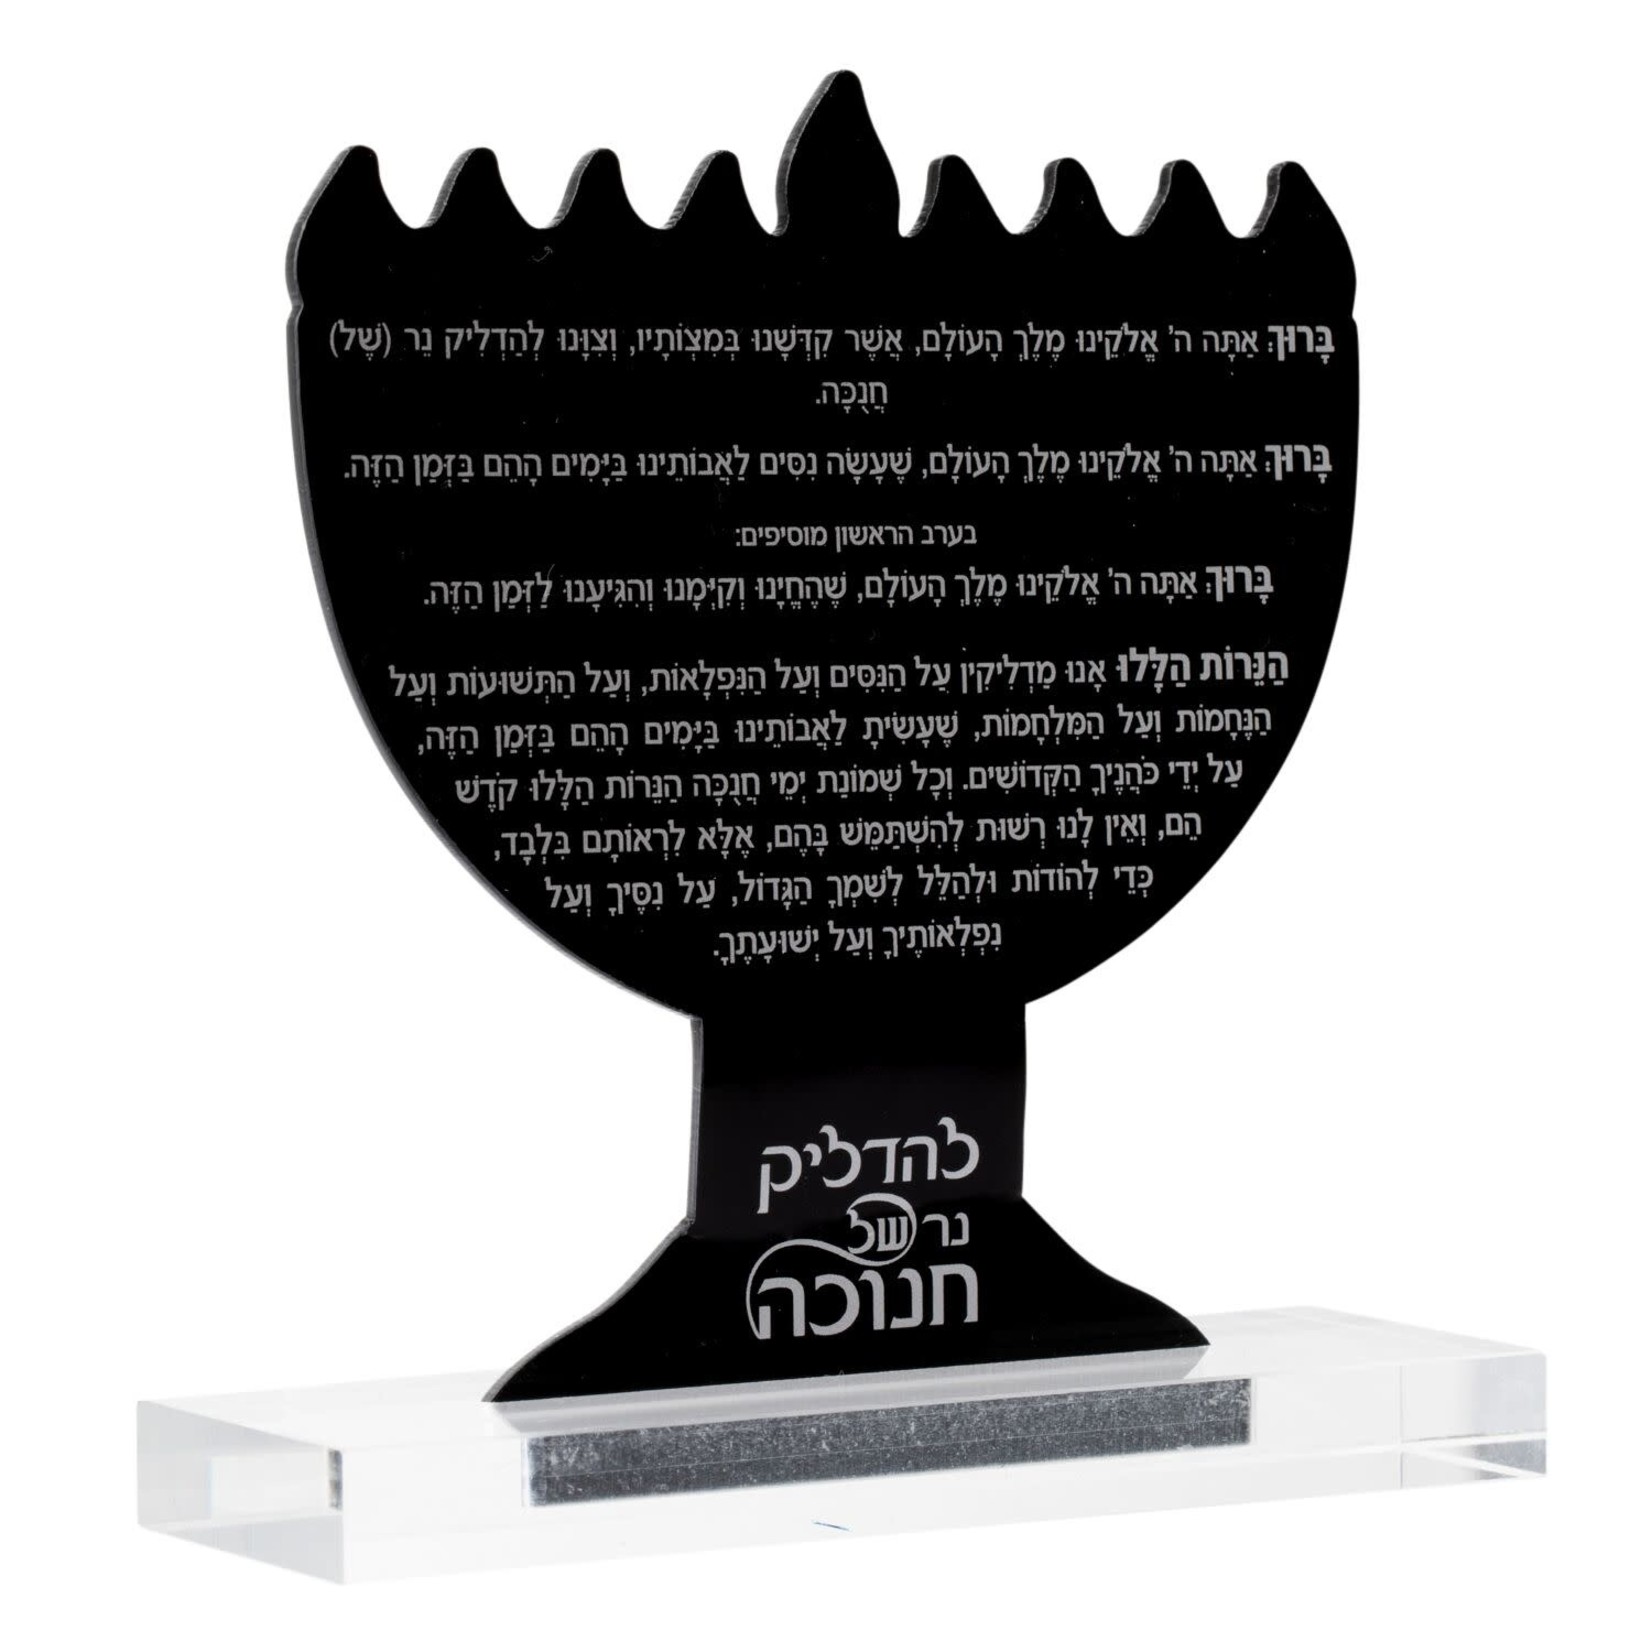 Presented Touch Chanukah Plaque Dual Sided Menorah Design Design Black Silver